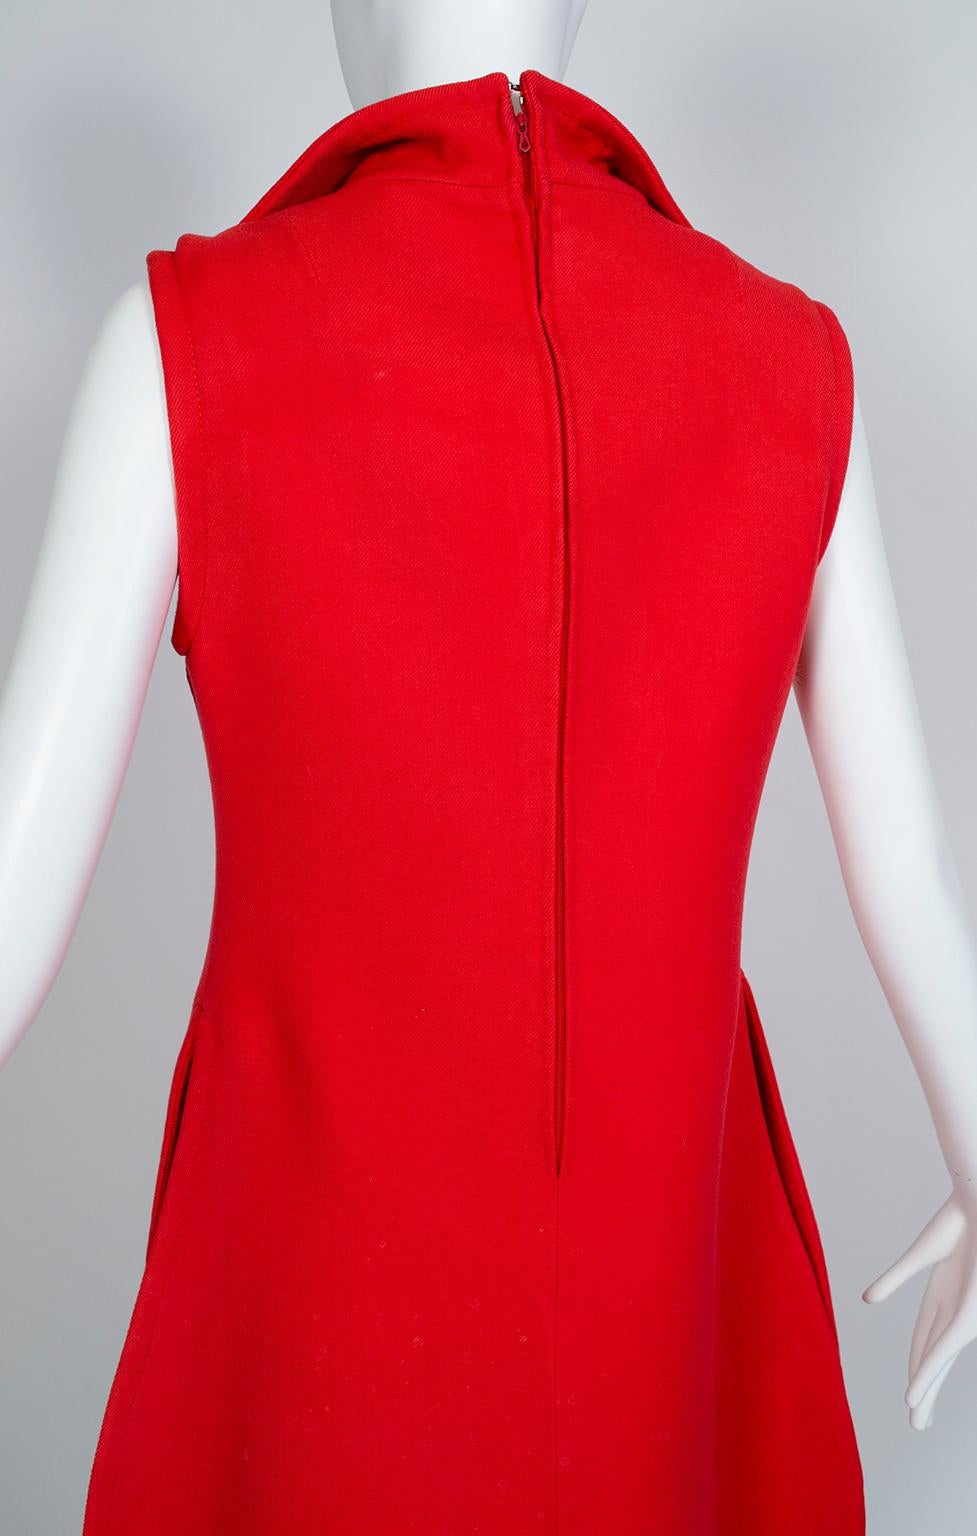 Red Space-Age Pierre Cardin Prototype Cutout Tabard Dress w Provenance-S-M, 1969 2